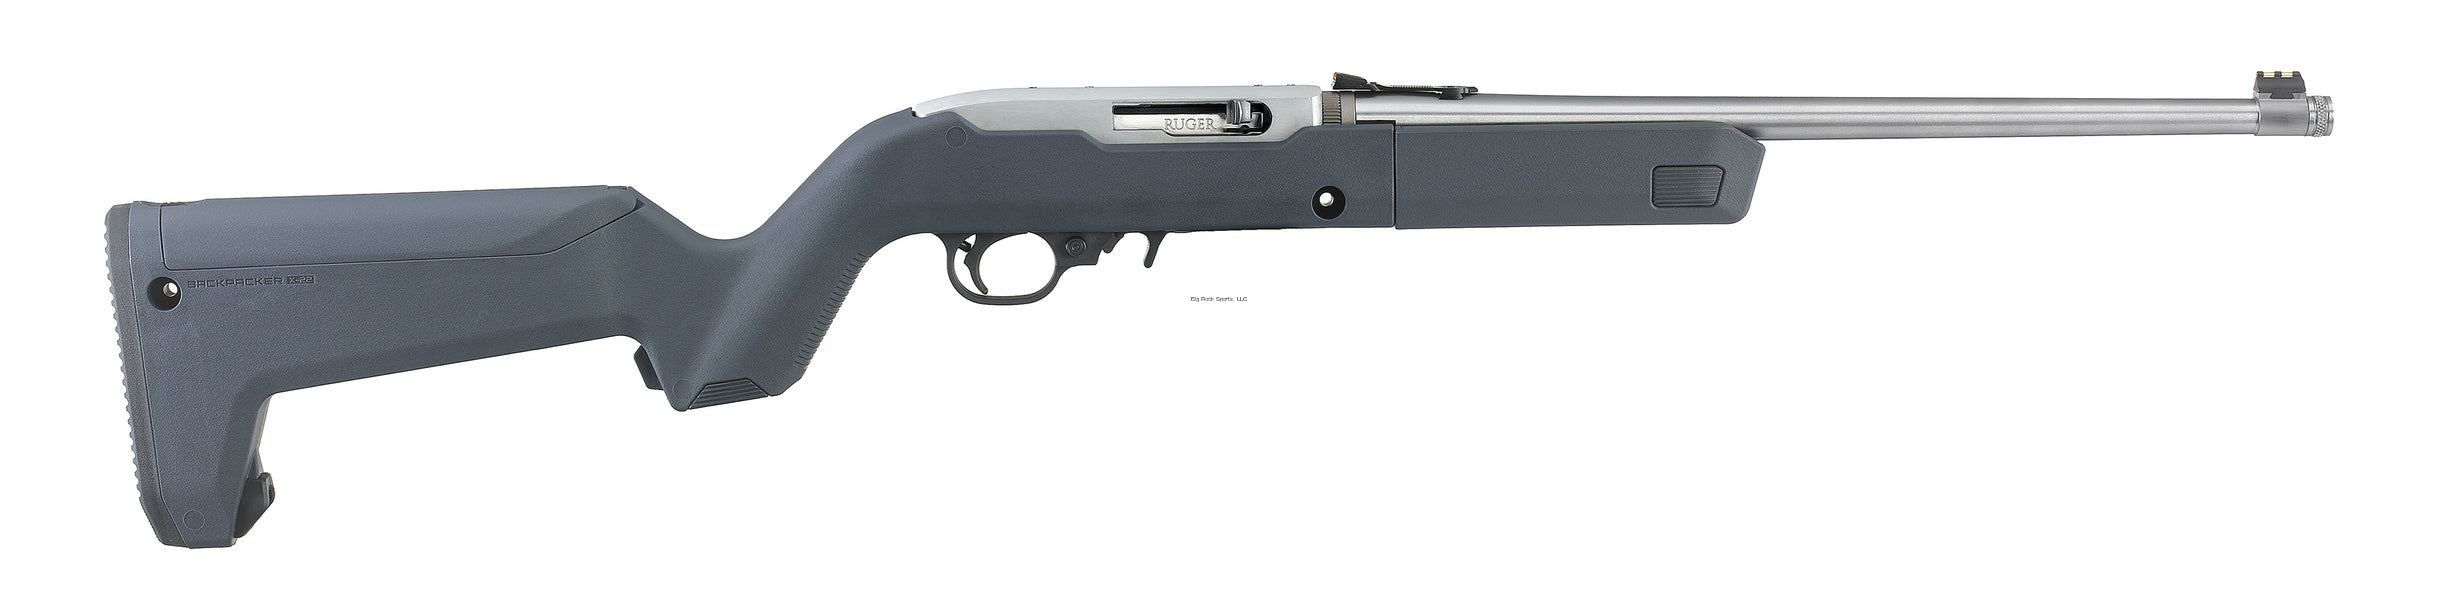 Ruger 31152 Takedown Semi-Auto Rifle, .22 LR